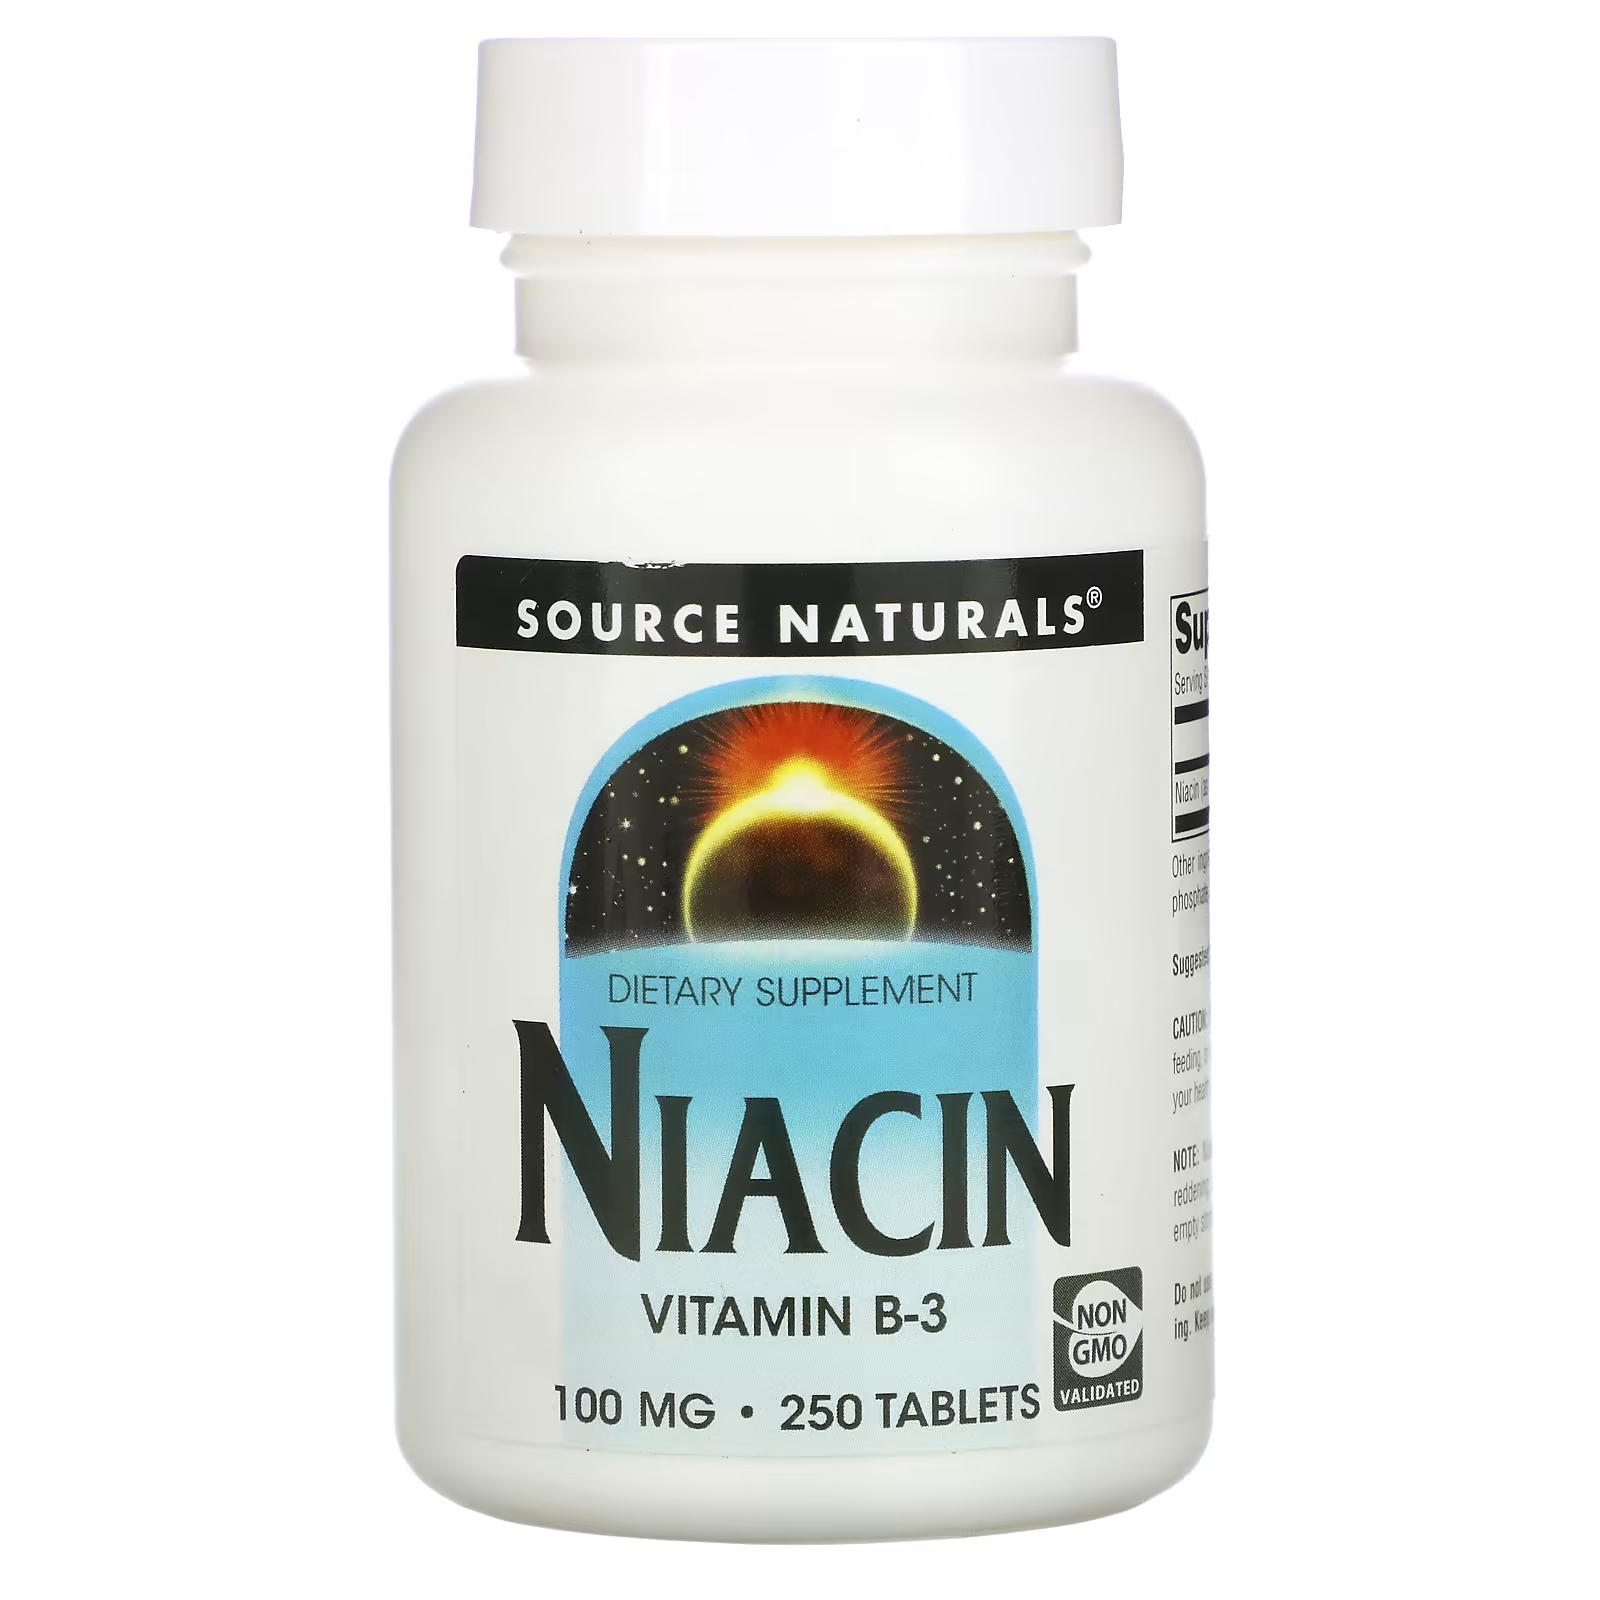 Source Naturals ниацин 100 мг, 250 таблеток source naturals пабк 100 мг 250 таблеток